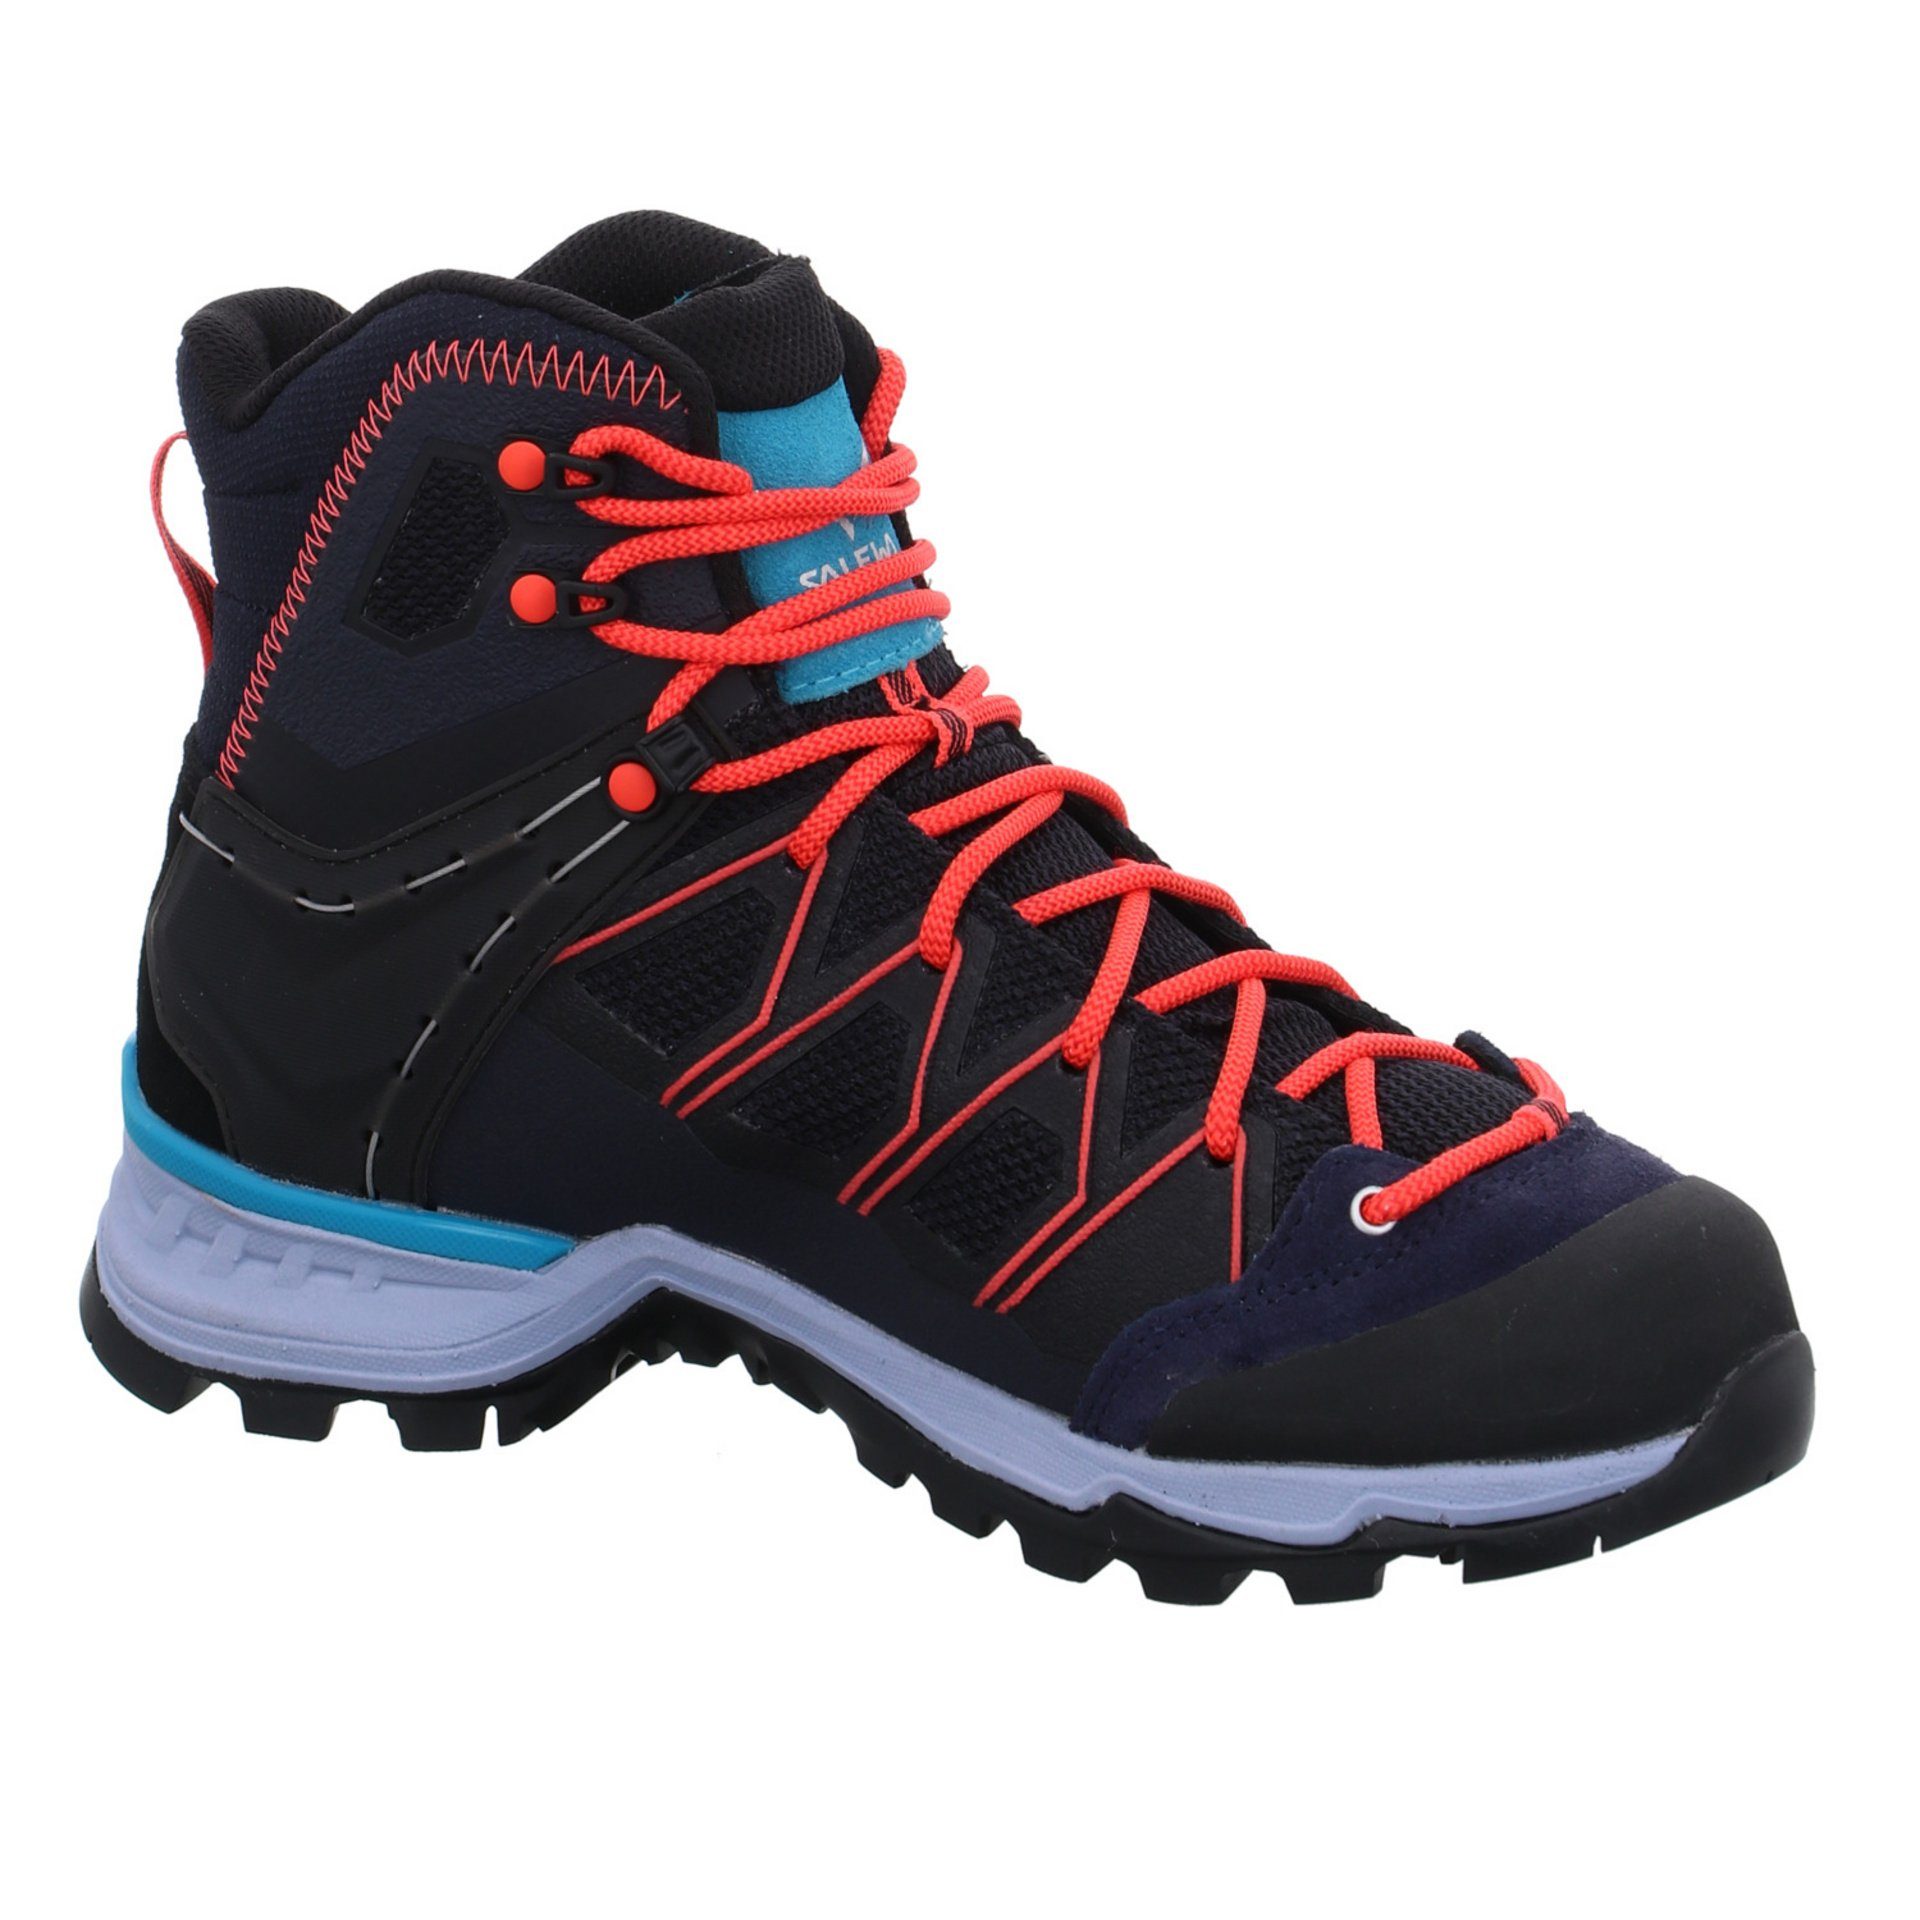 Salewa Damen Schuhe Navy/Blue 3989 Premium Fog Outdoor Leder-/Textilkombination Outdoorschuh